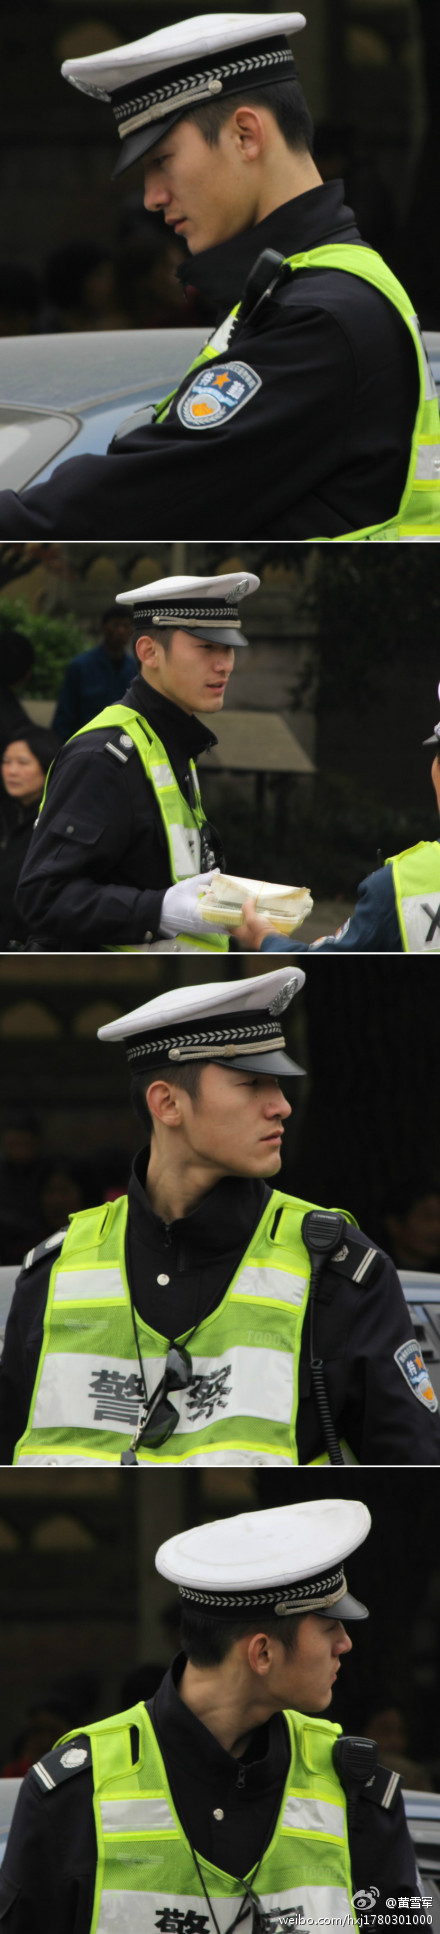 chinese-policeman-xu-hao-2.jpg